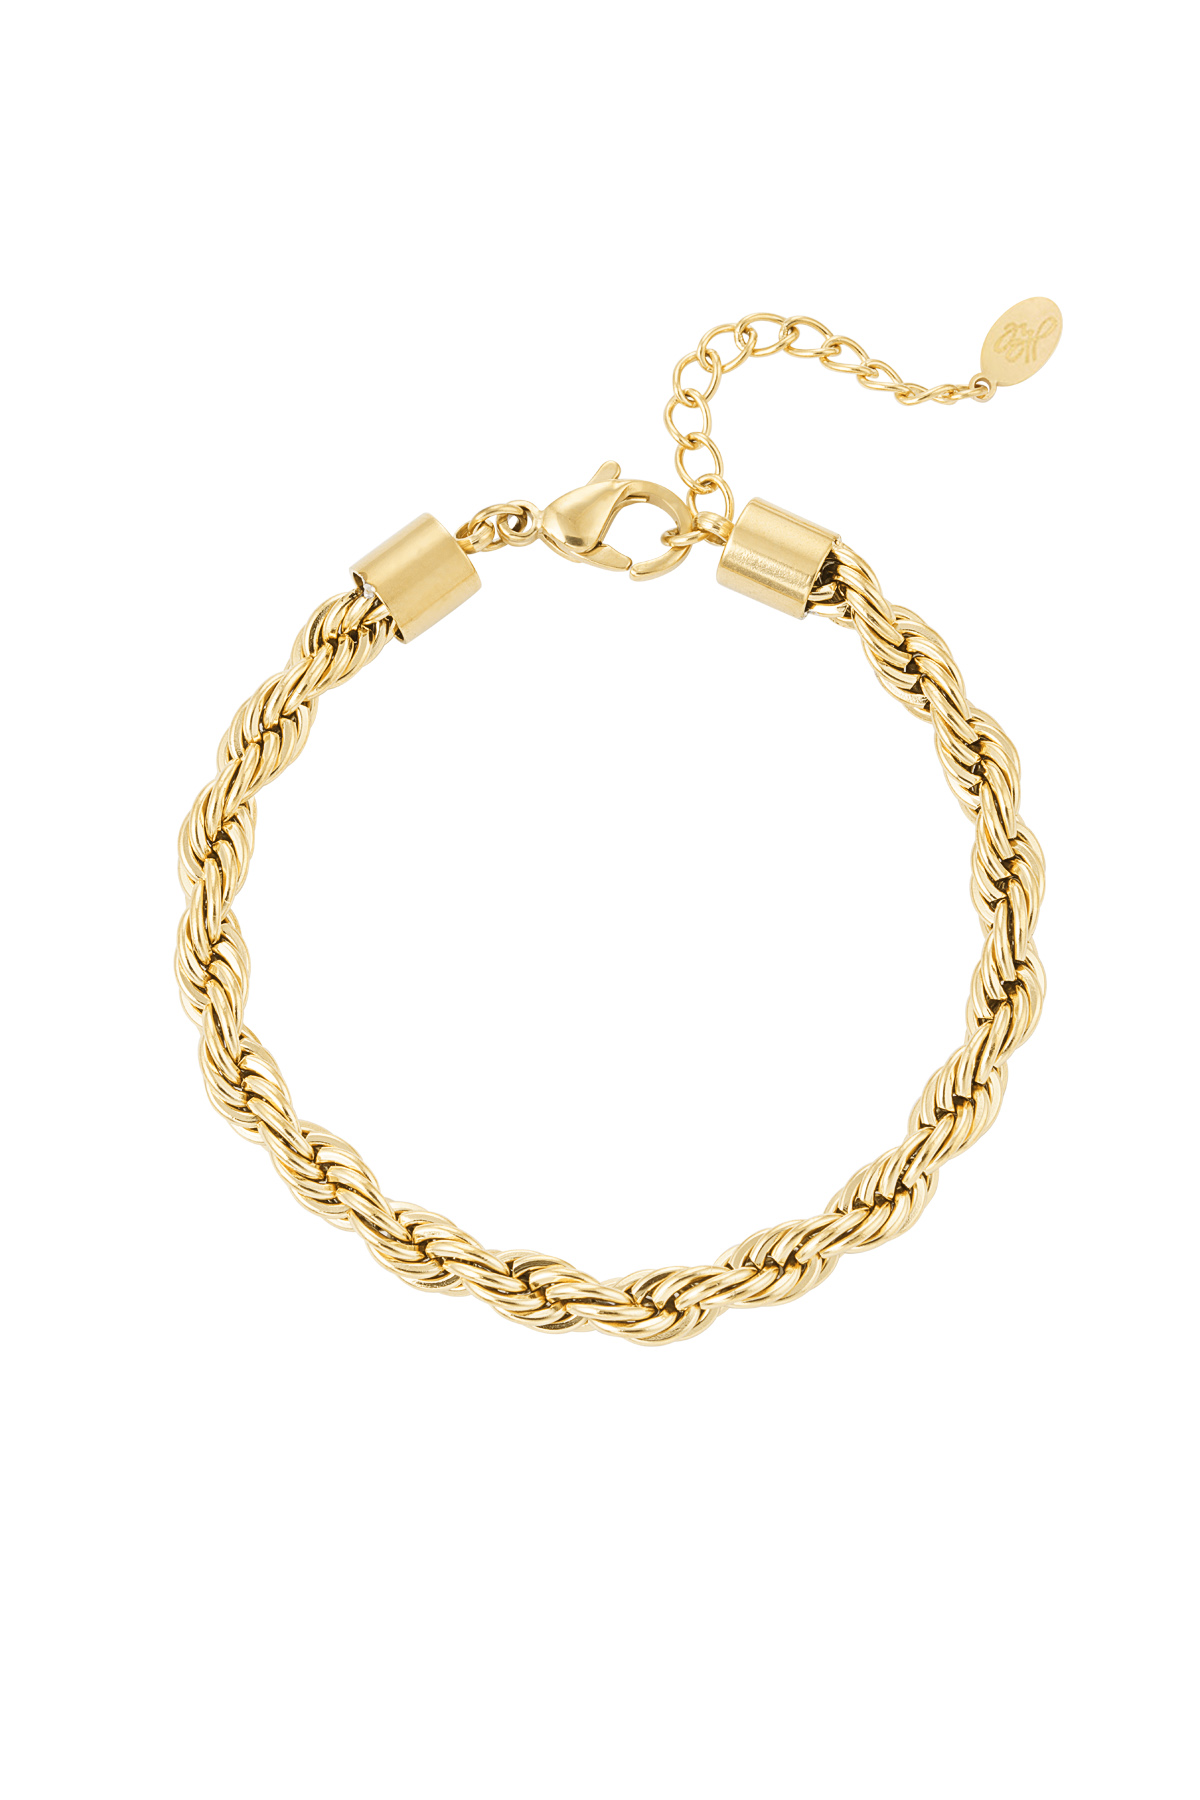 Unisex bracelet playful twist - gold - 4.5MM h5 